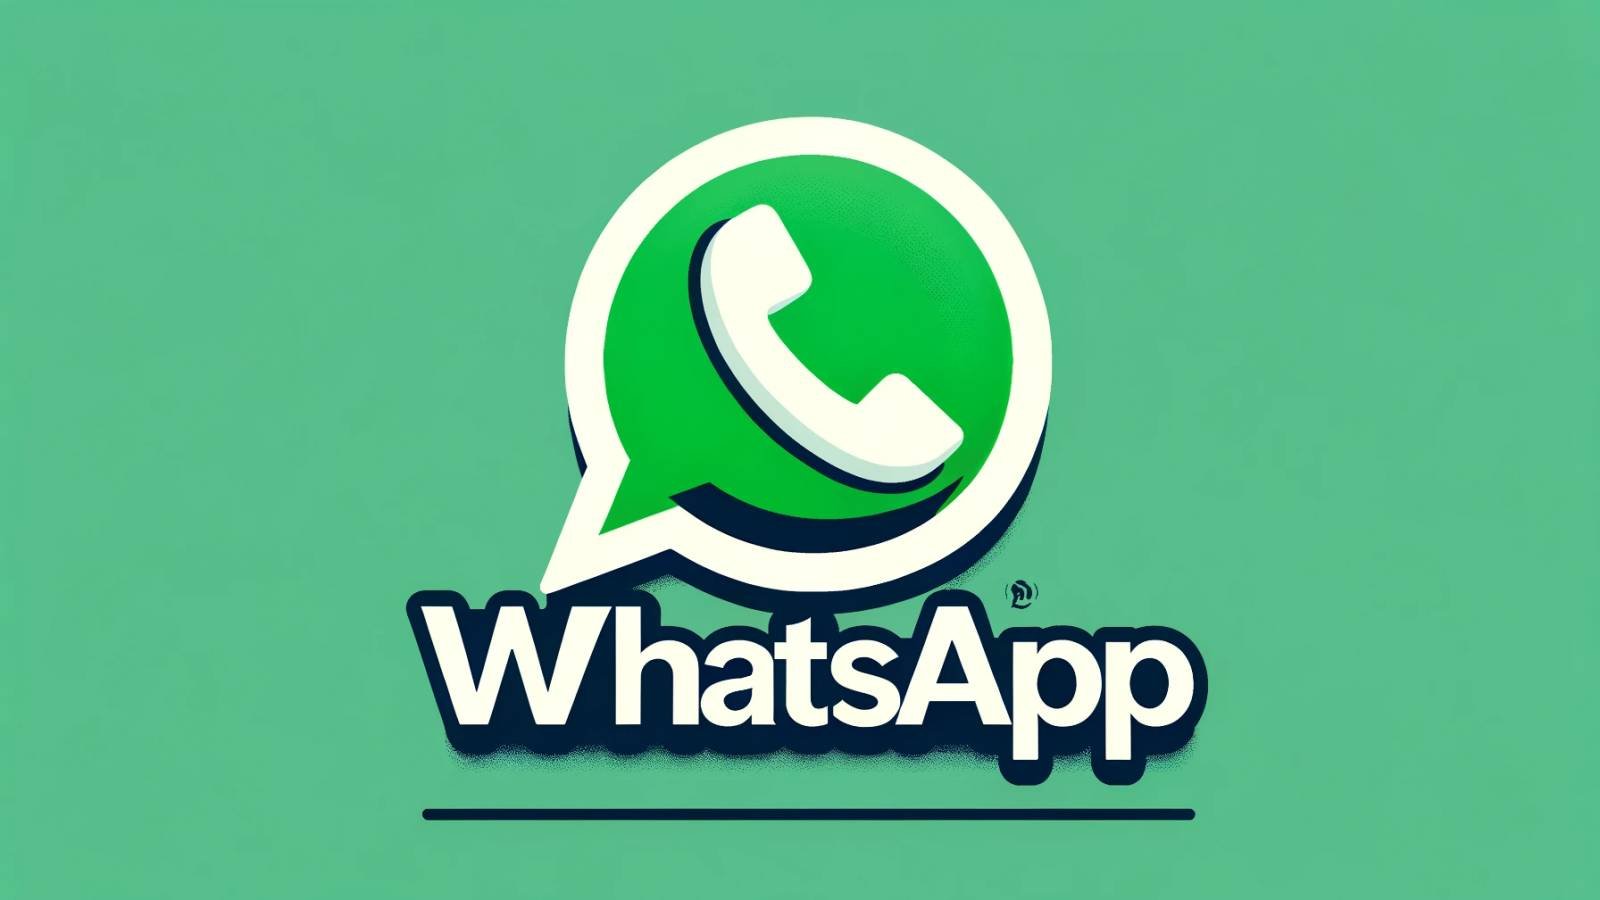 WhatsApp persistent